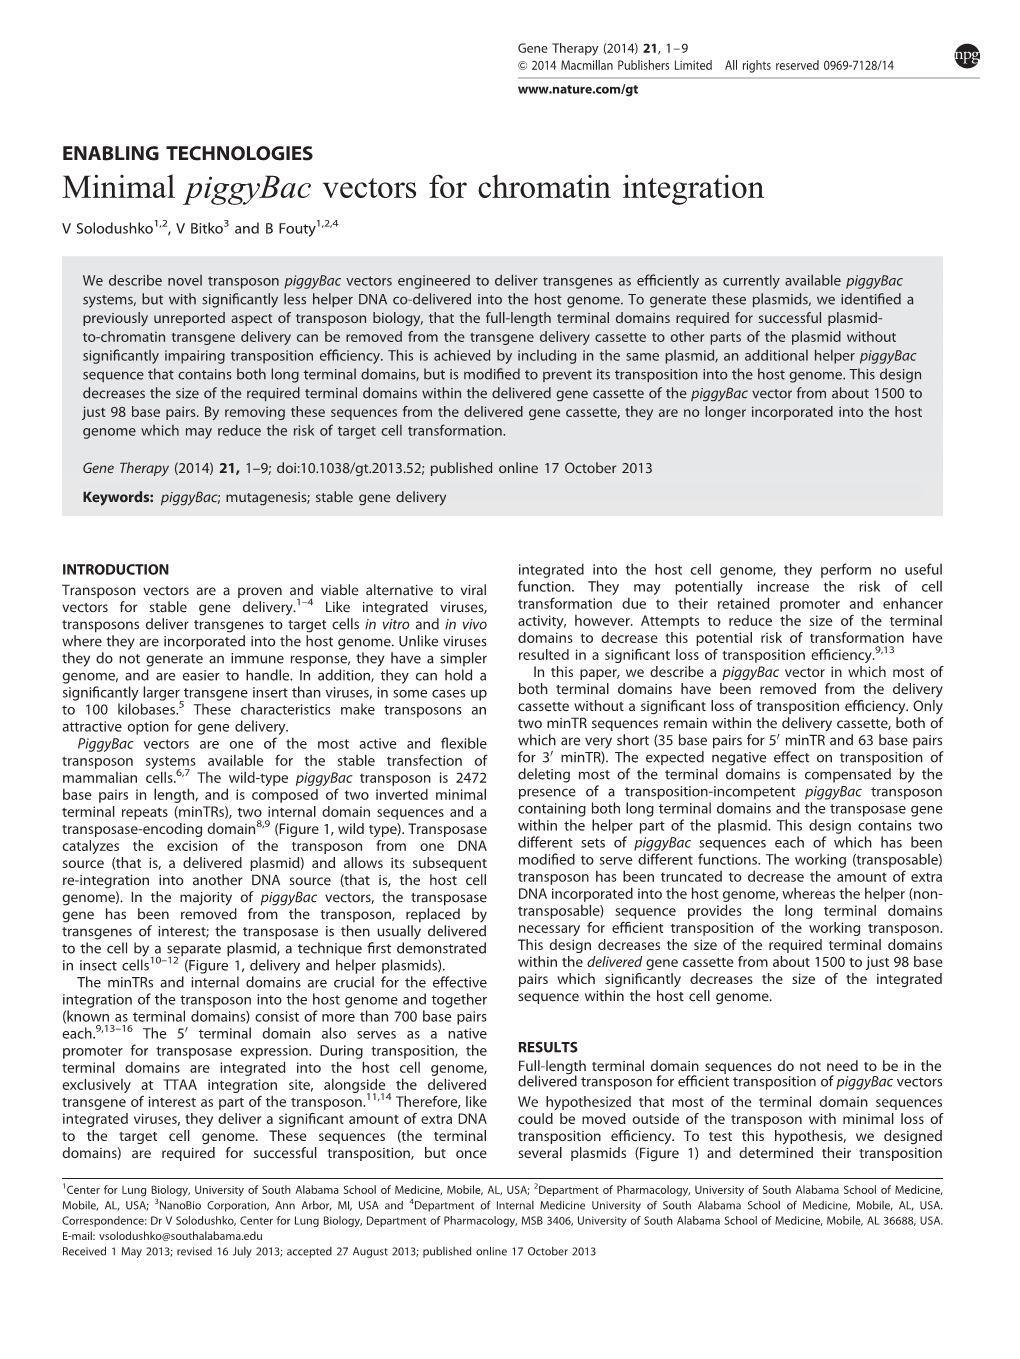 Minimal Piggybac Vectors for Chromatin Integration